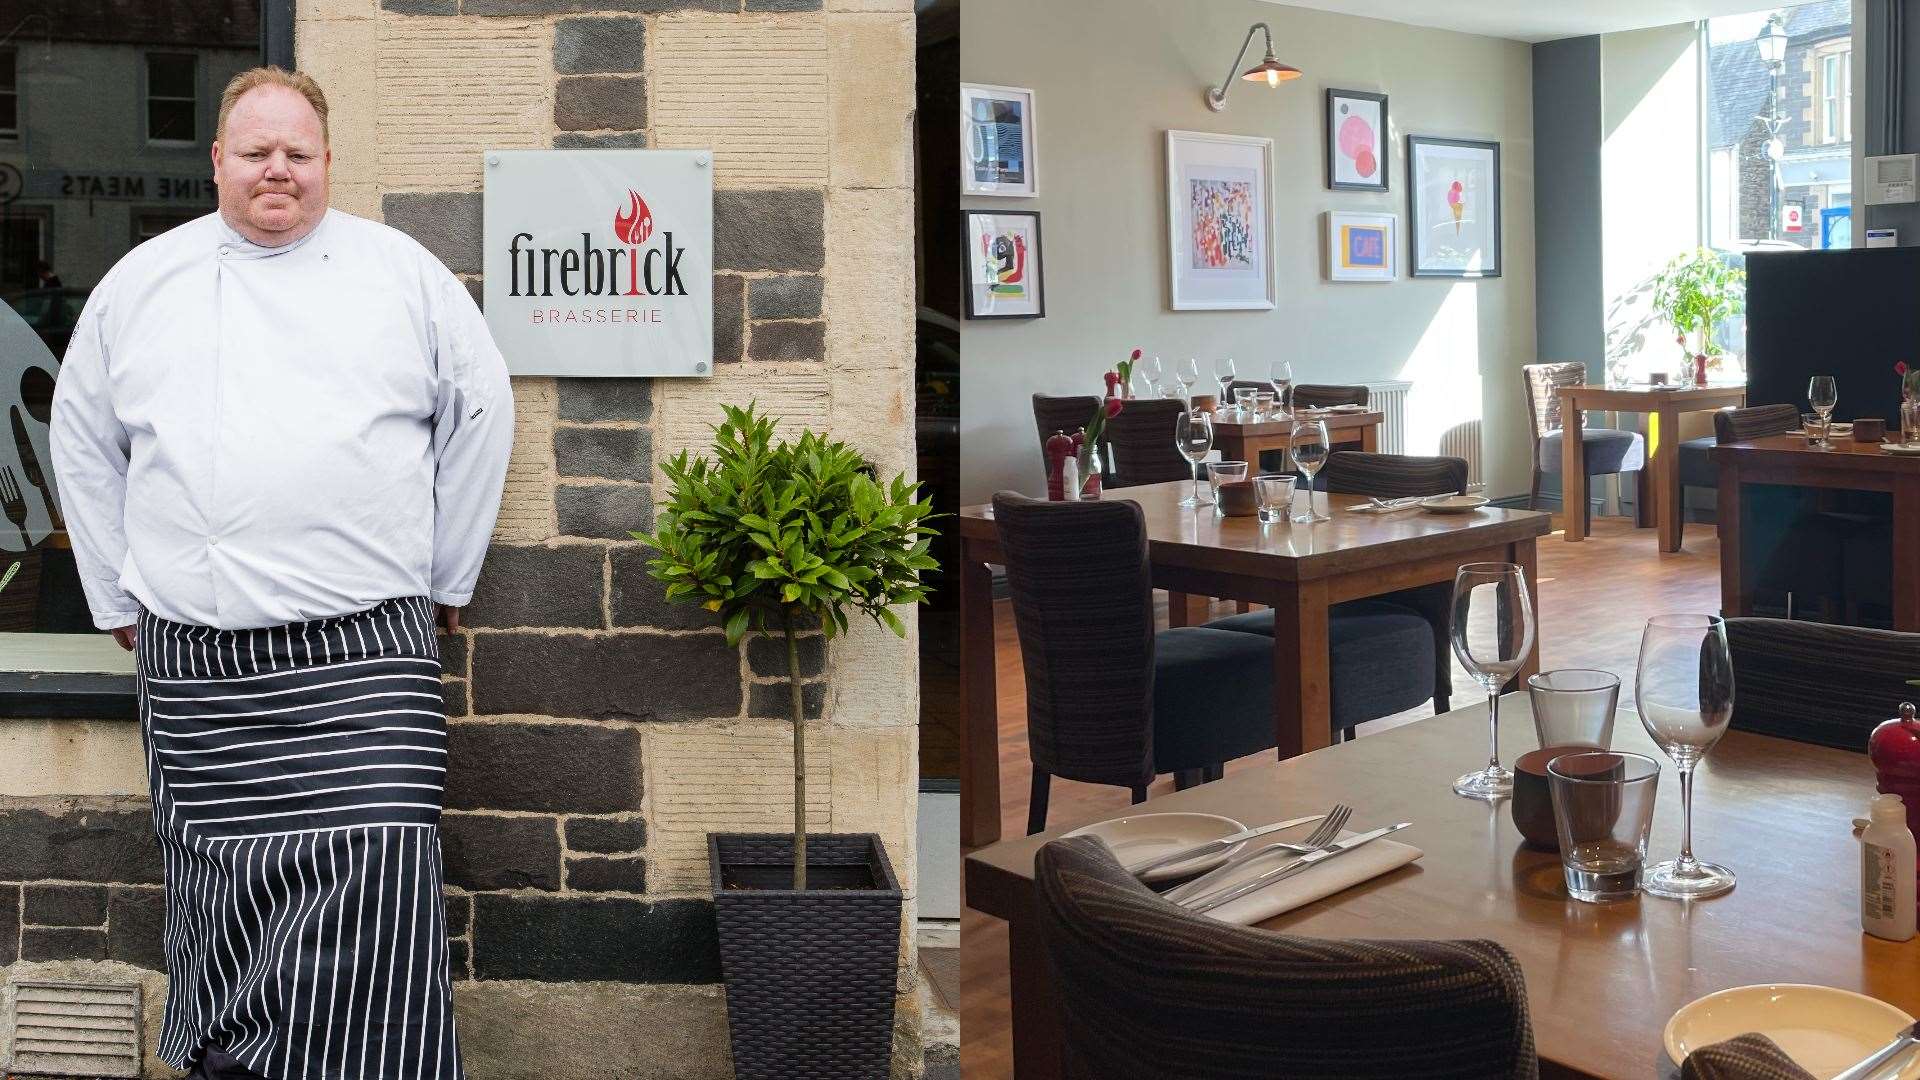 David Haetzman has had to shut his restaurant, the Firebrick Brasserie in Lauder, Scotland, due to rising costs (Amanda Jordan/PA)